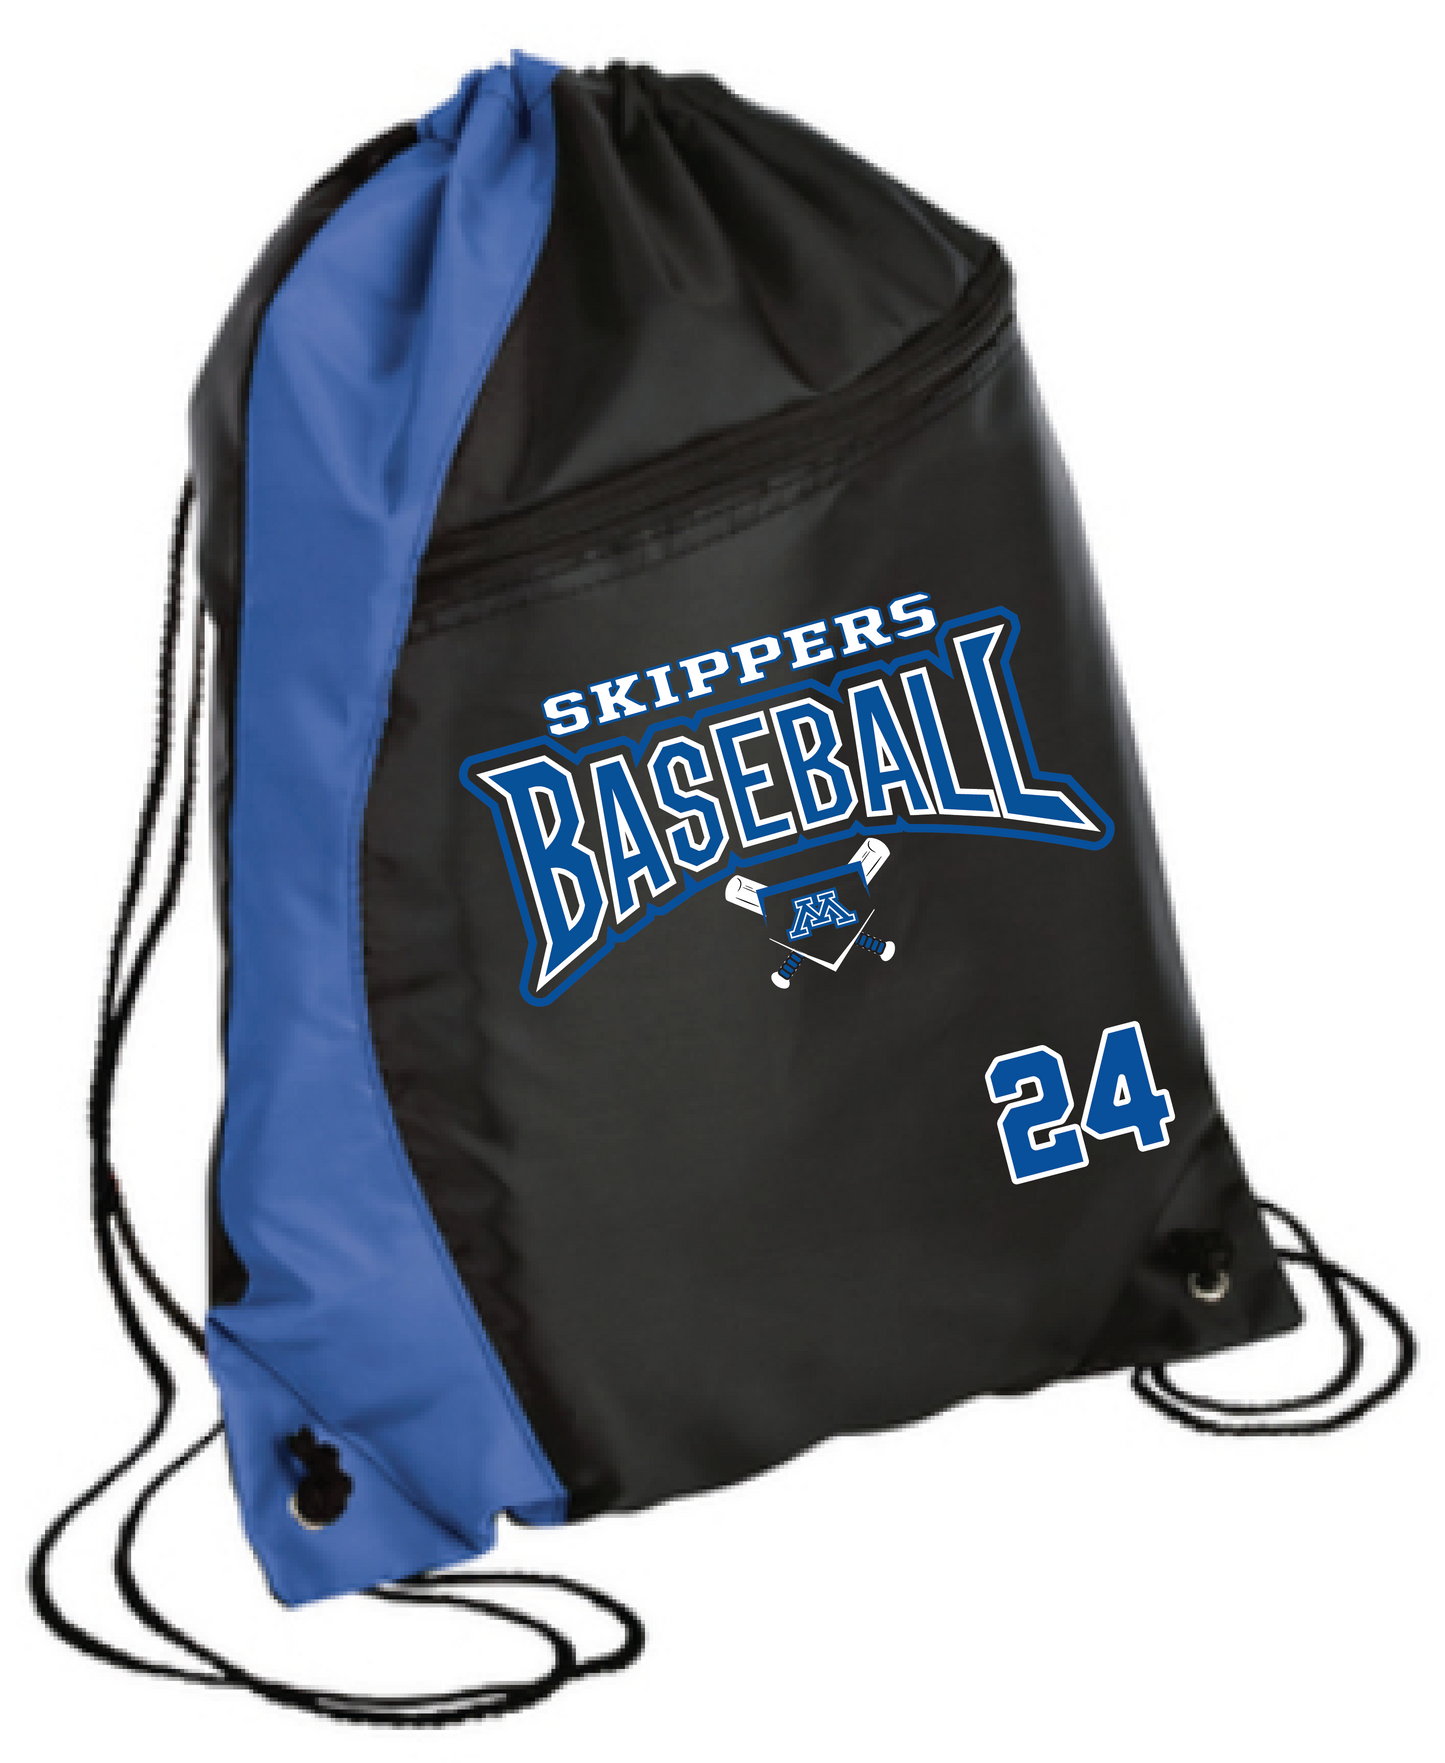 Baseball Colorblock Drawstring Bag